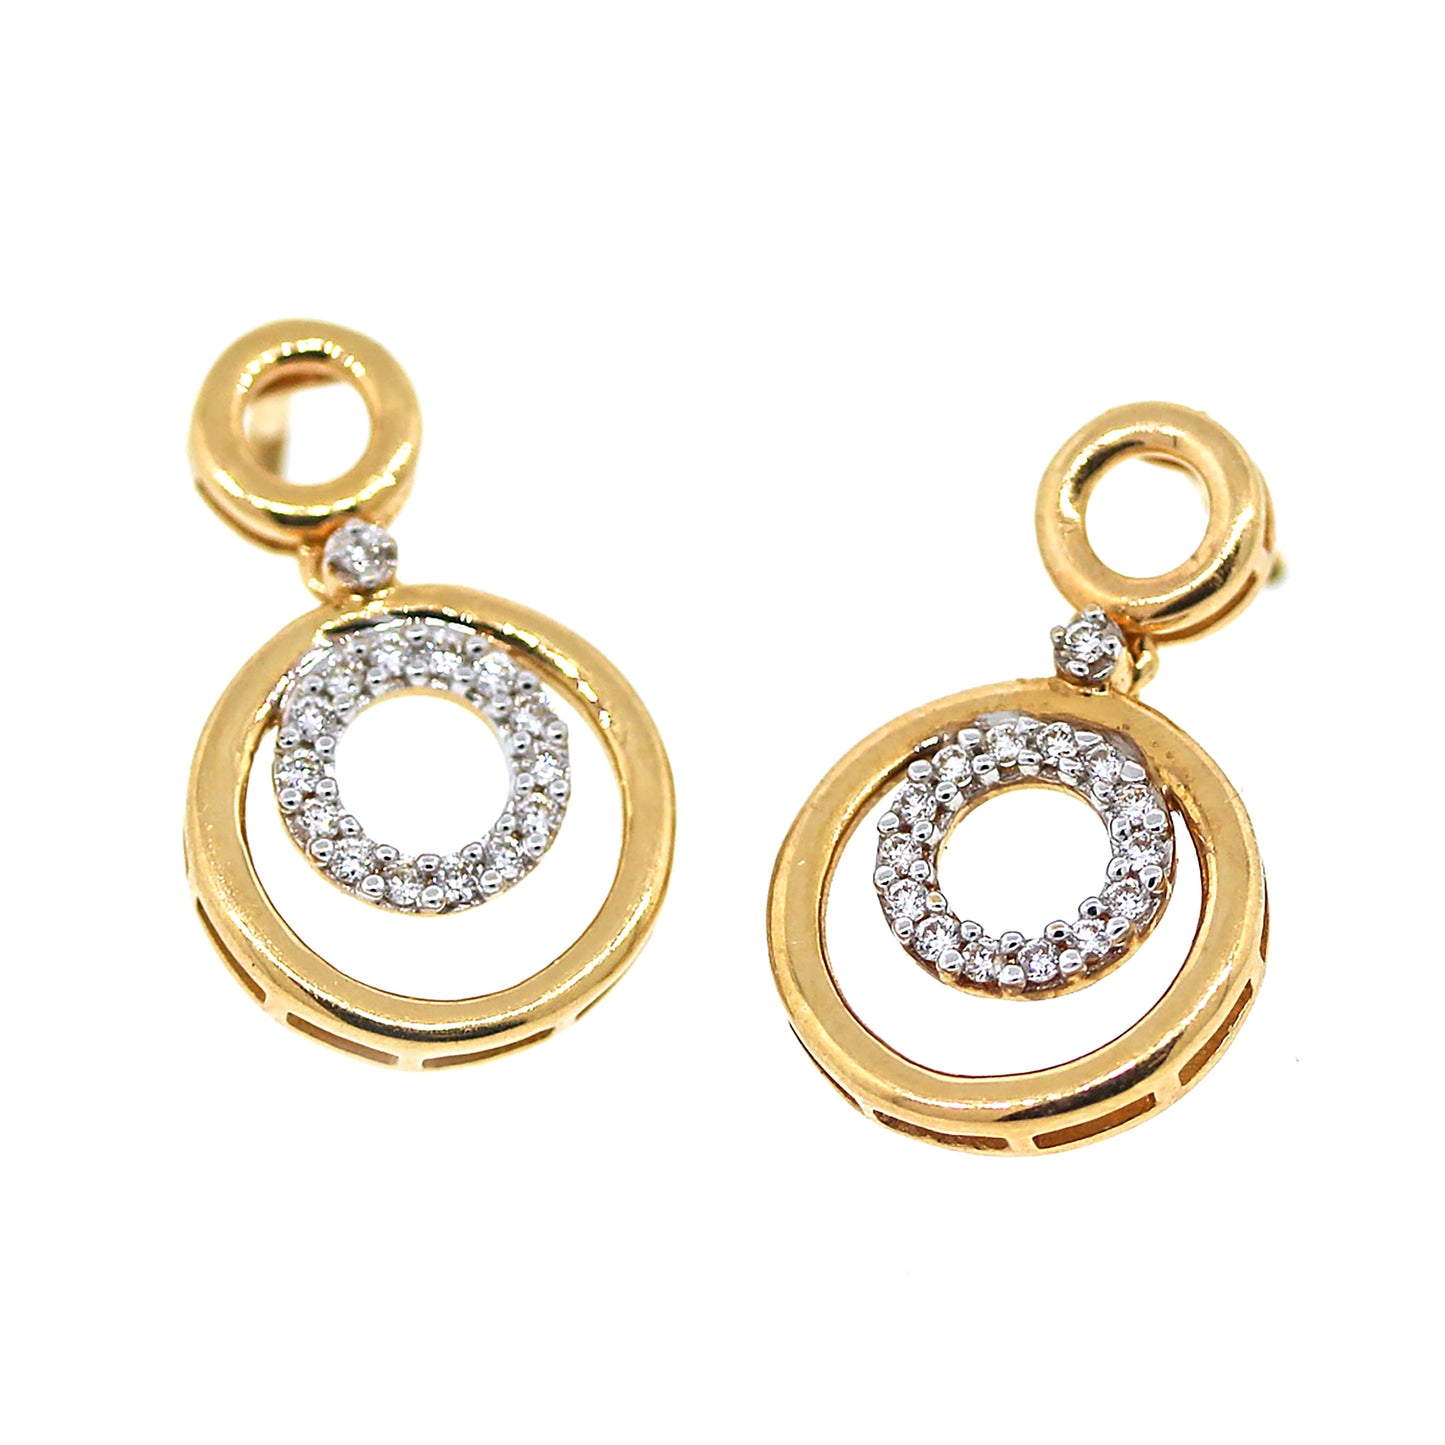 Get Gold Hanging Earrings at Affordable Price | Parakkat Jewels